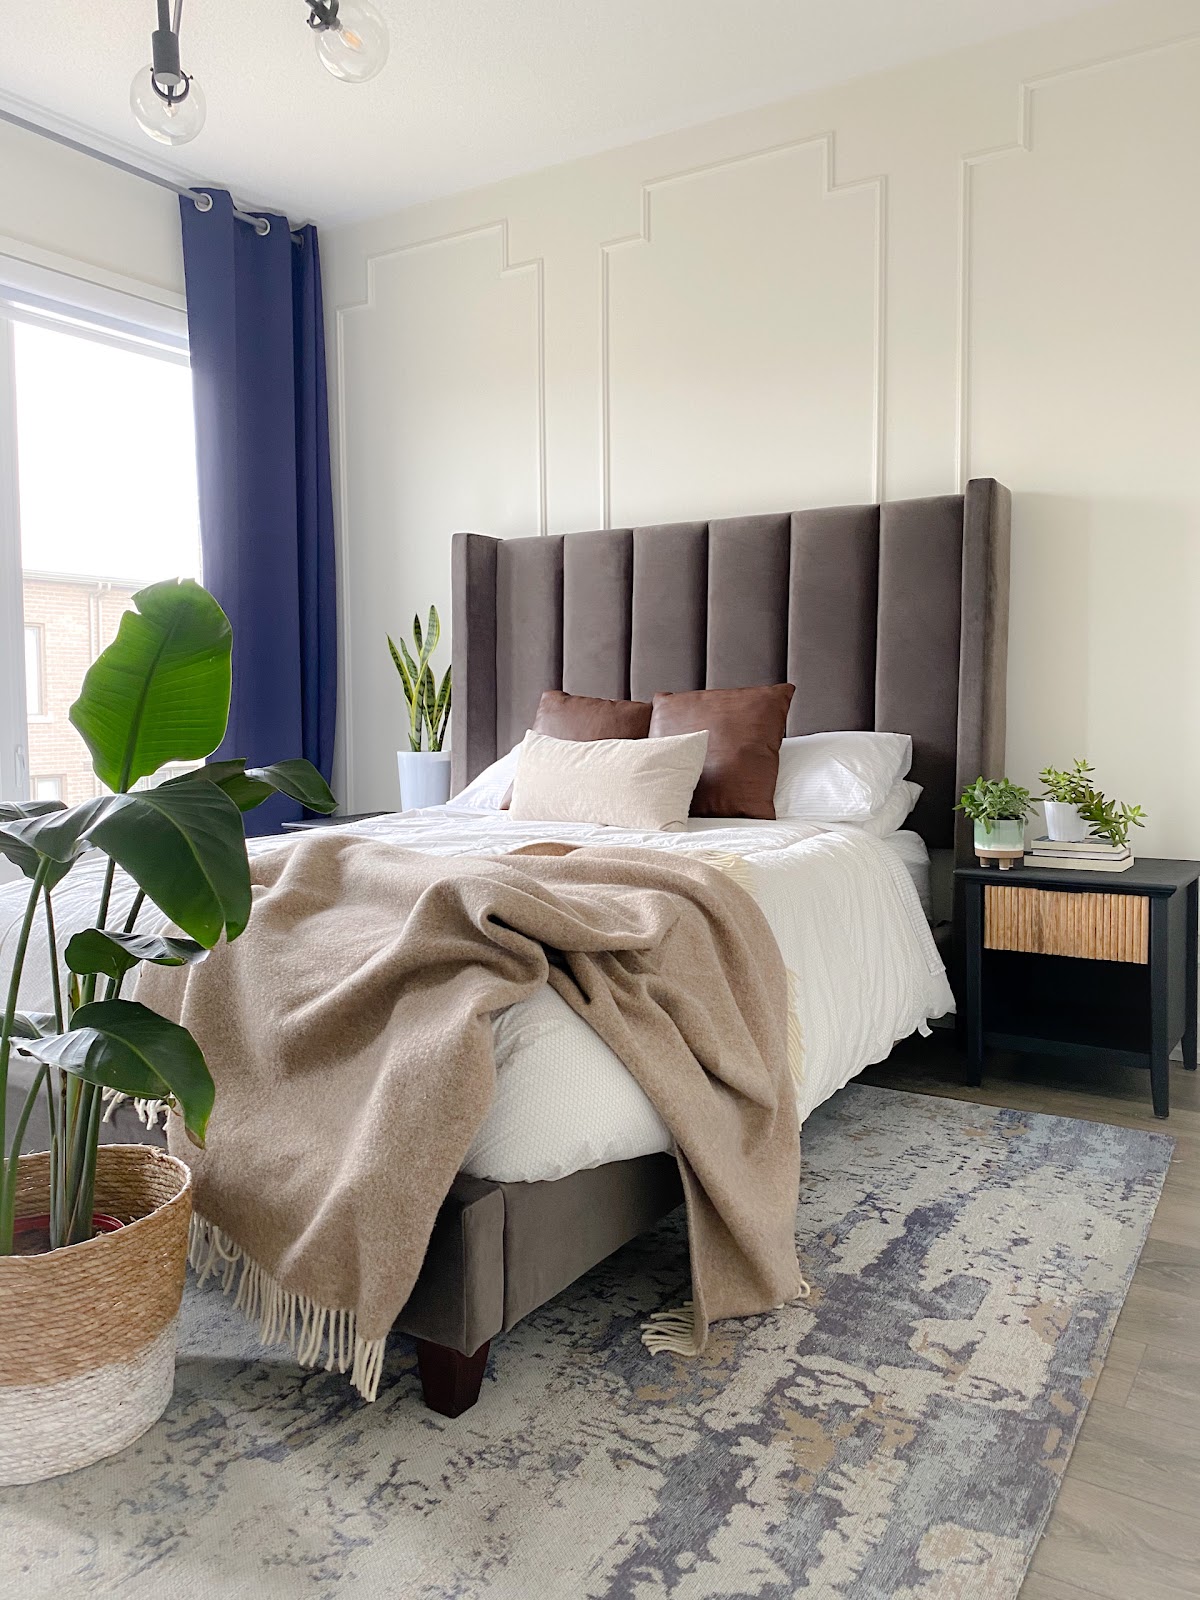 Bright bedroom with decorative molding
Grey headboard